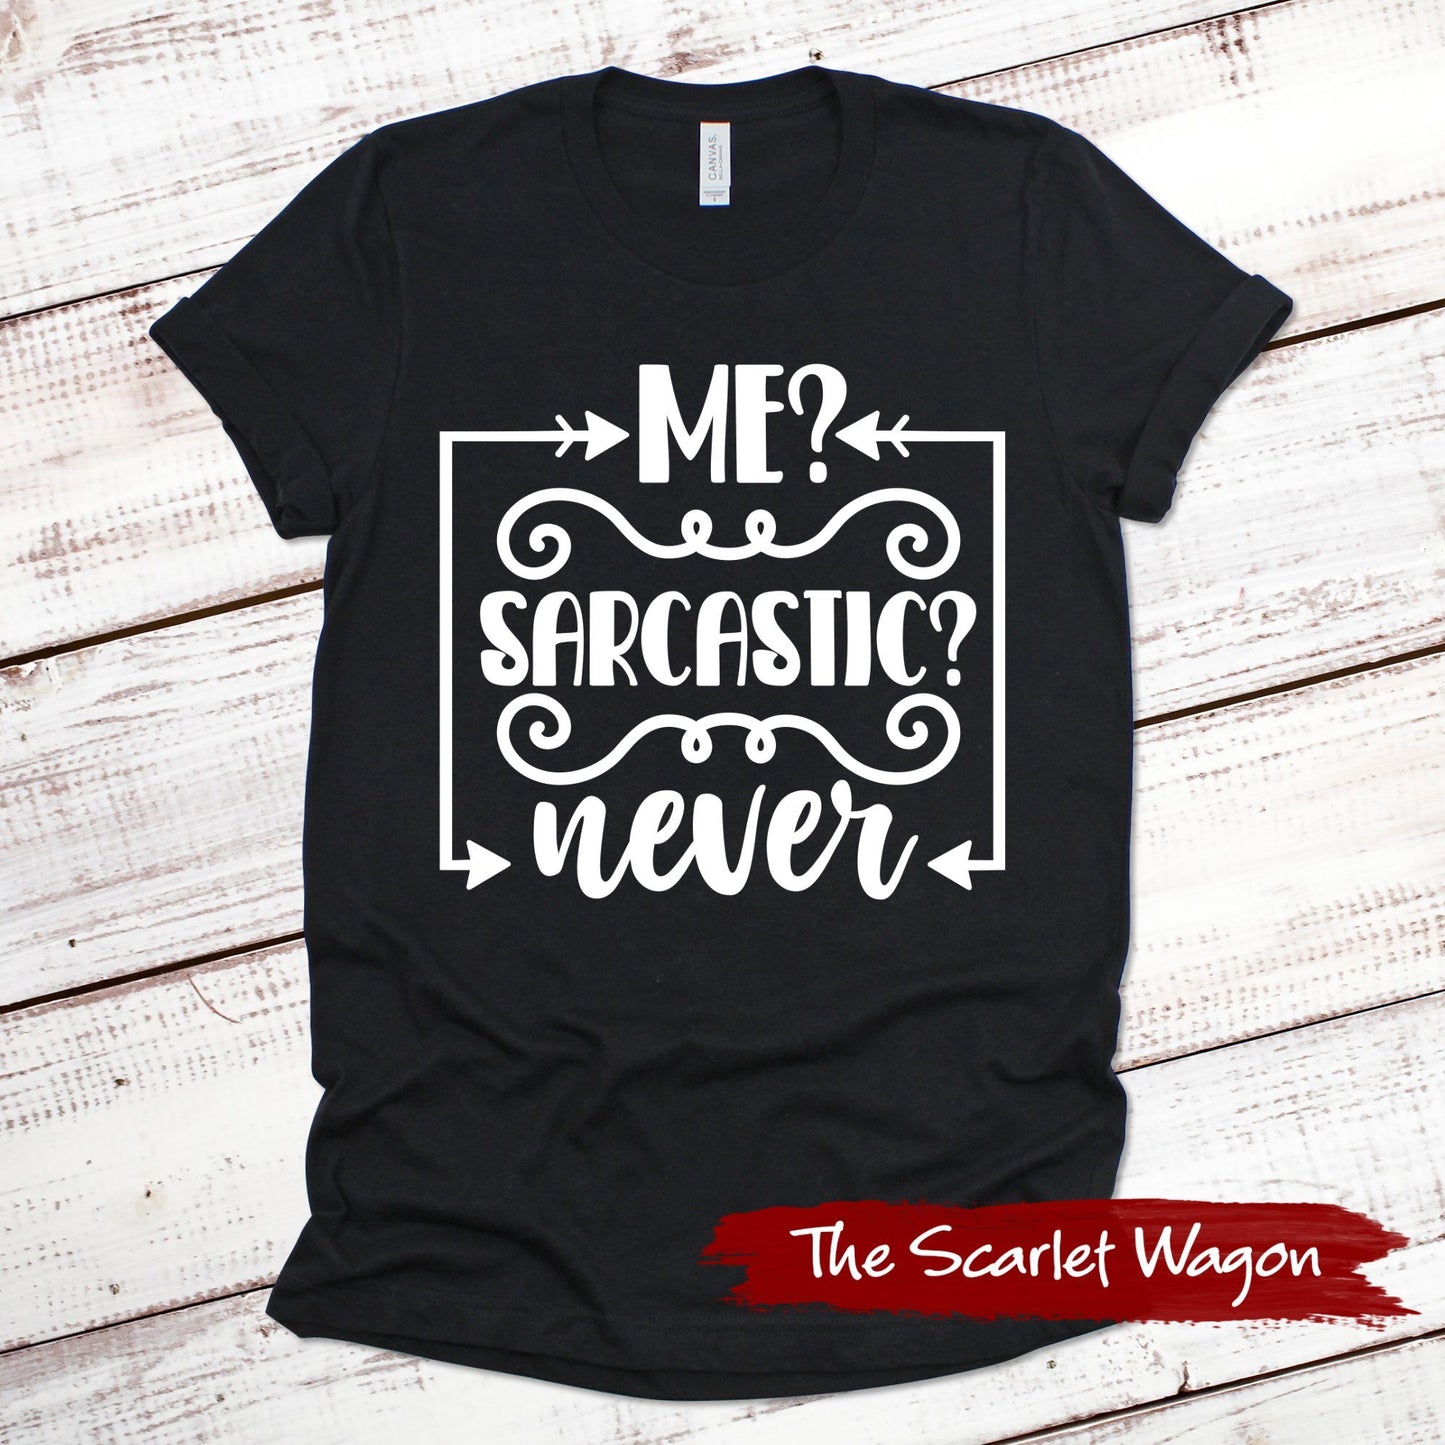 Me? Sarcastic? Never Funny Shirt Scarlet Wagon Black XS 